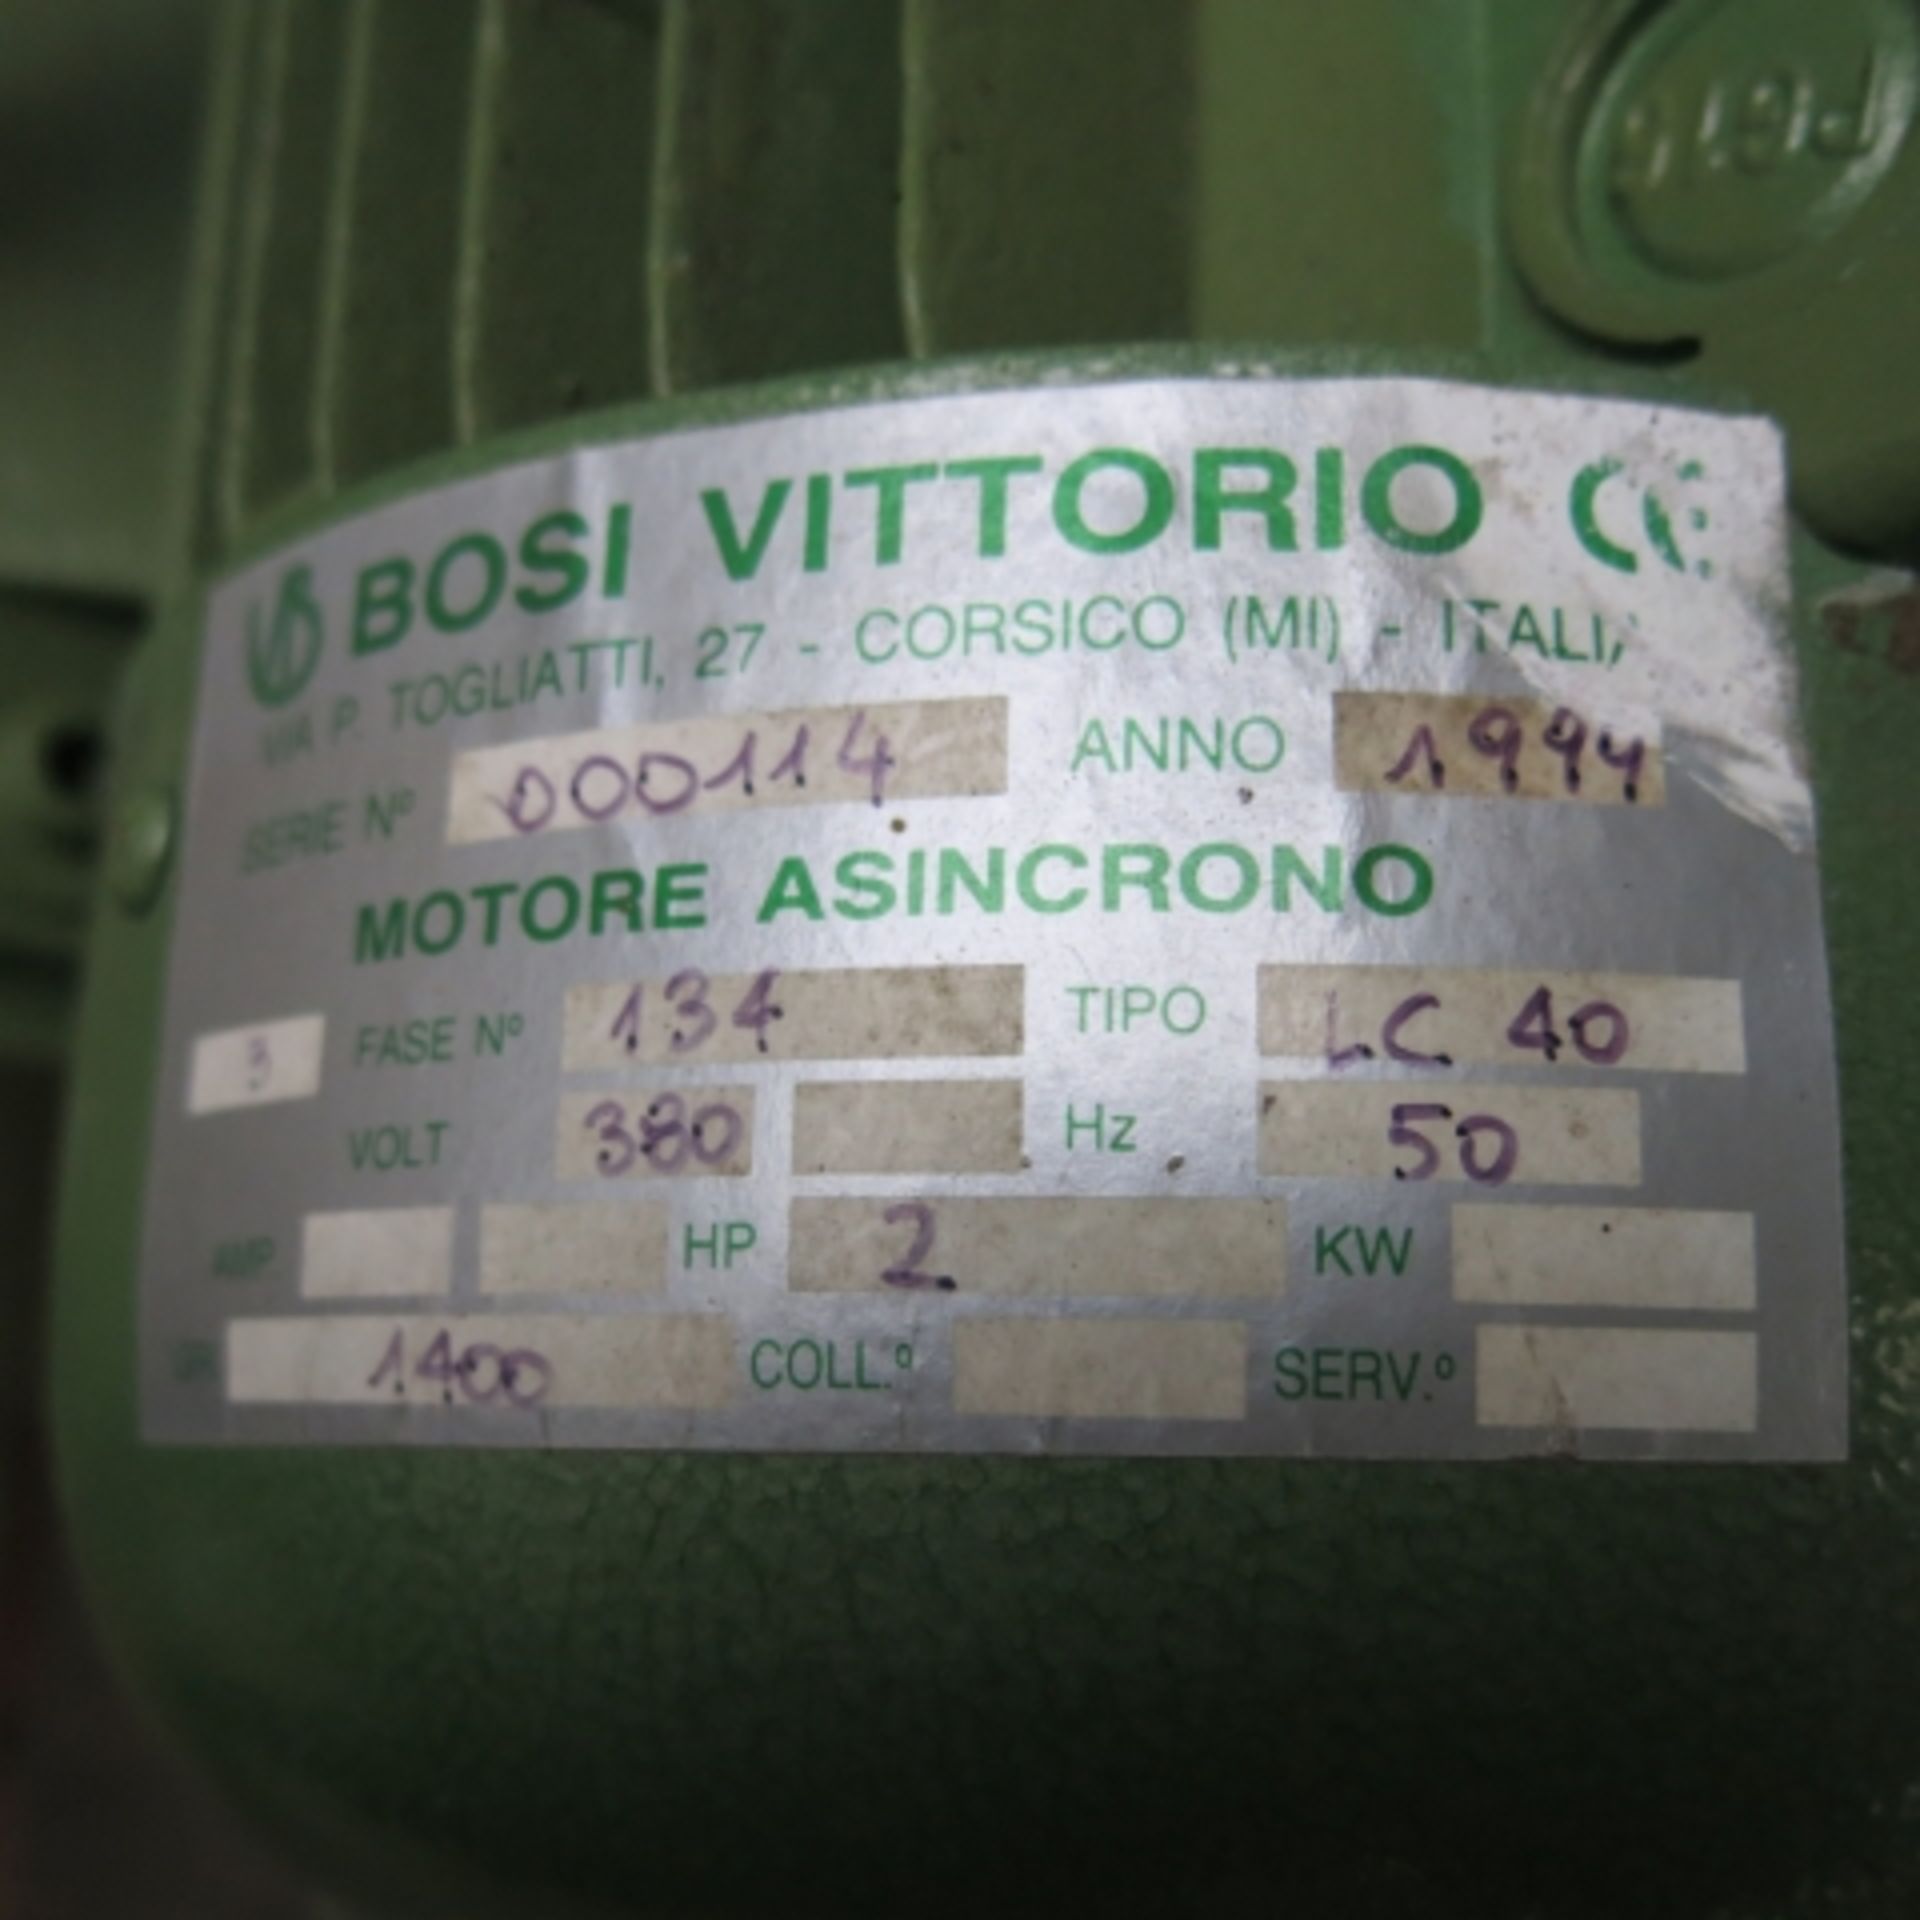 Bosi Vittorio Type LC 40 Honing Machine; 3 phase; belt dimension 2130 x 40mm; working table 450 x - Image 2 of 2